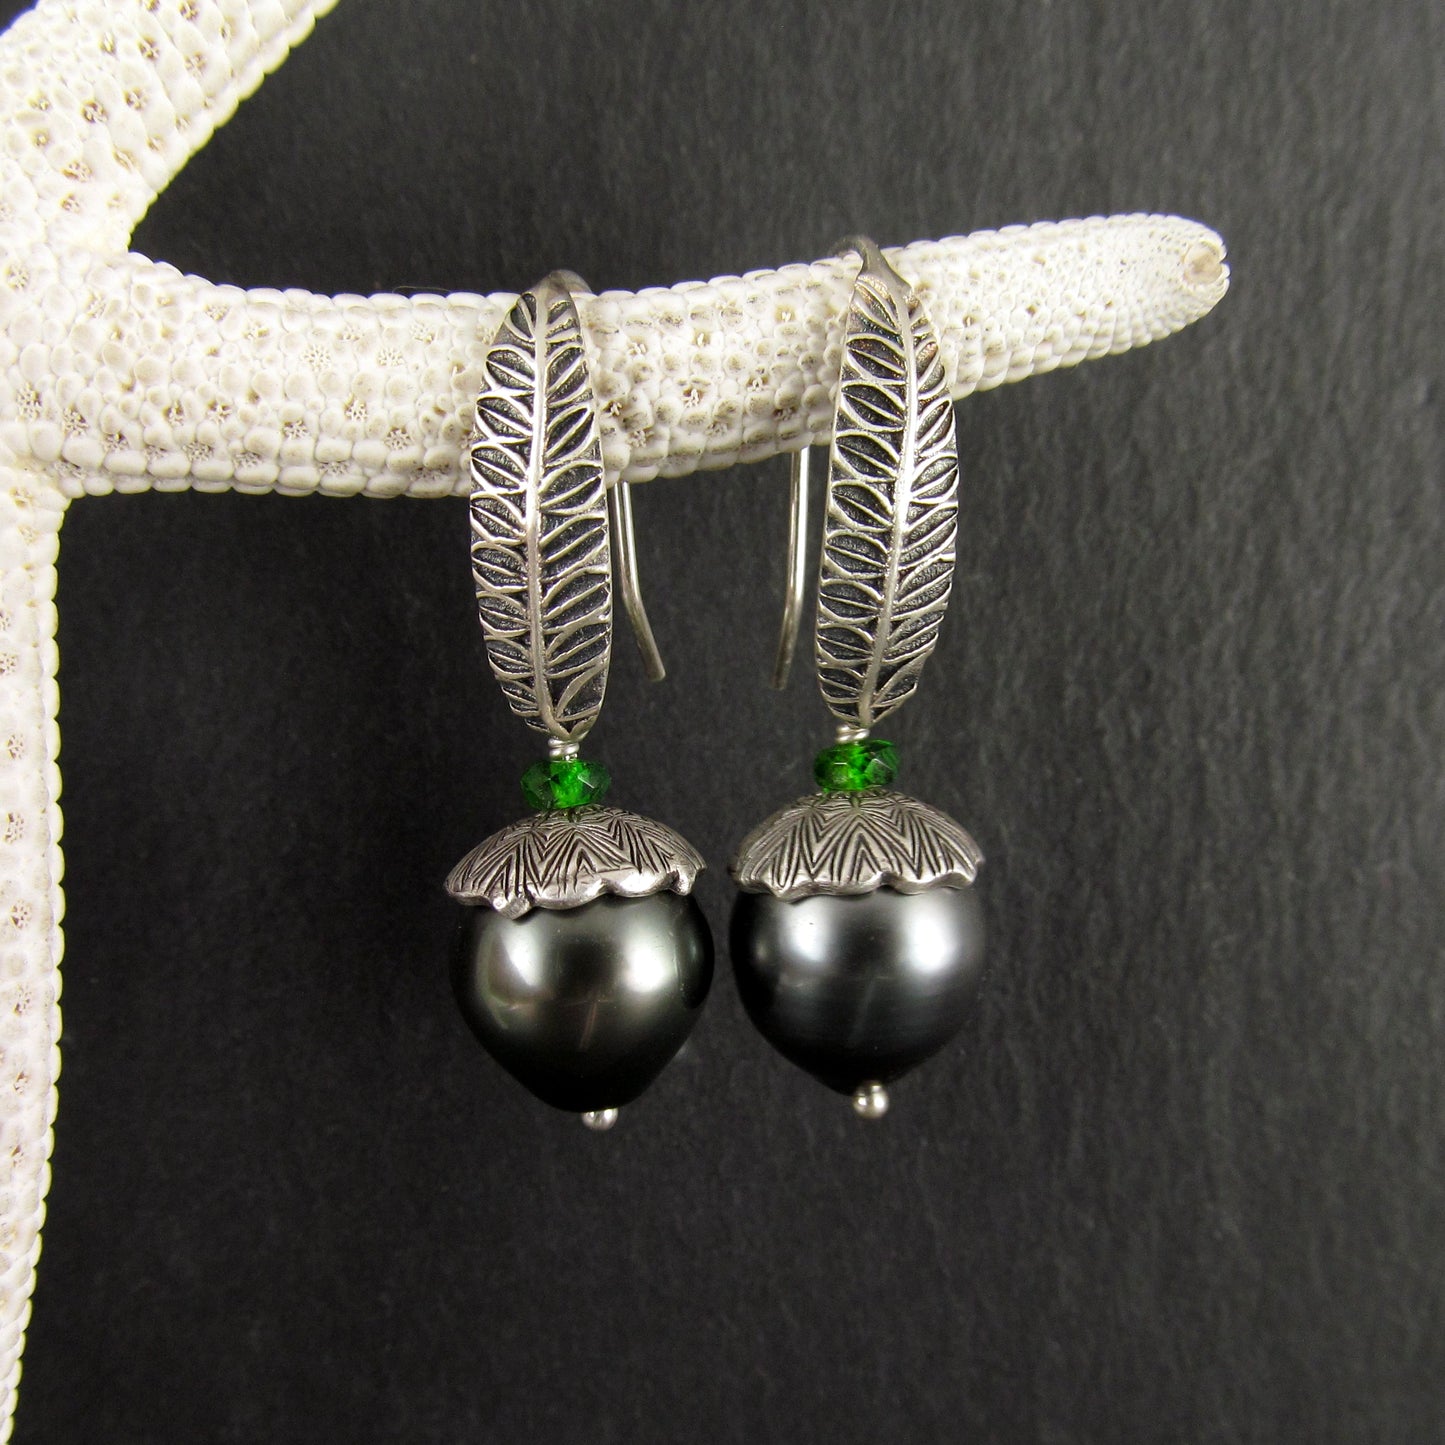 Tahitian pearl drop earrings, silver acorn earrings